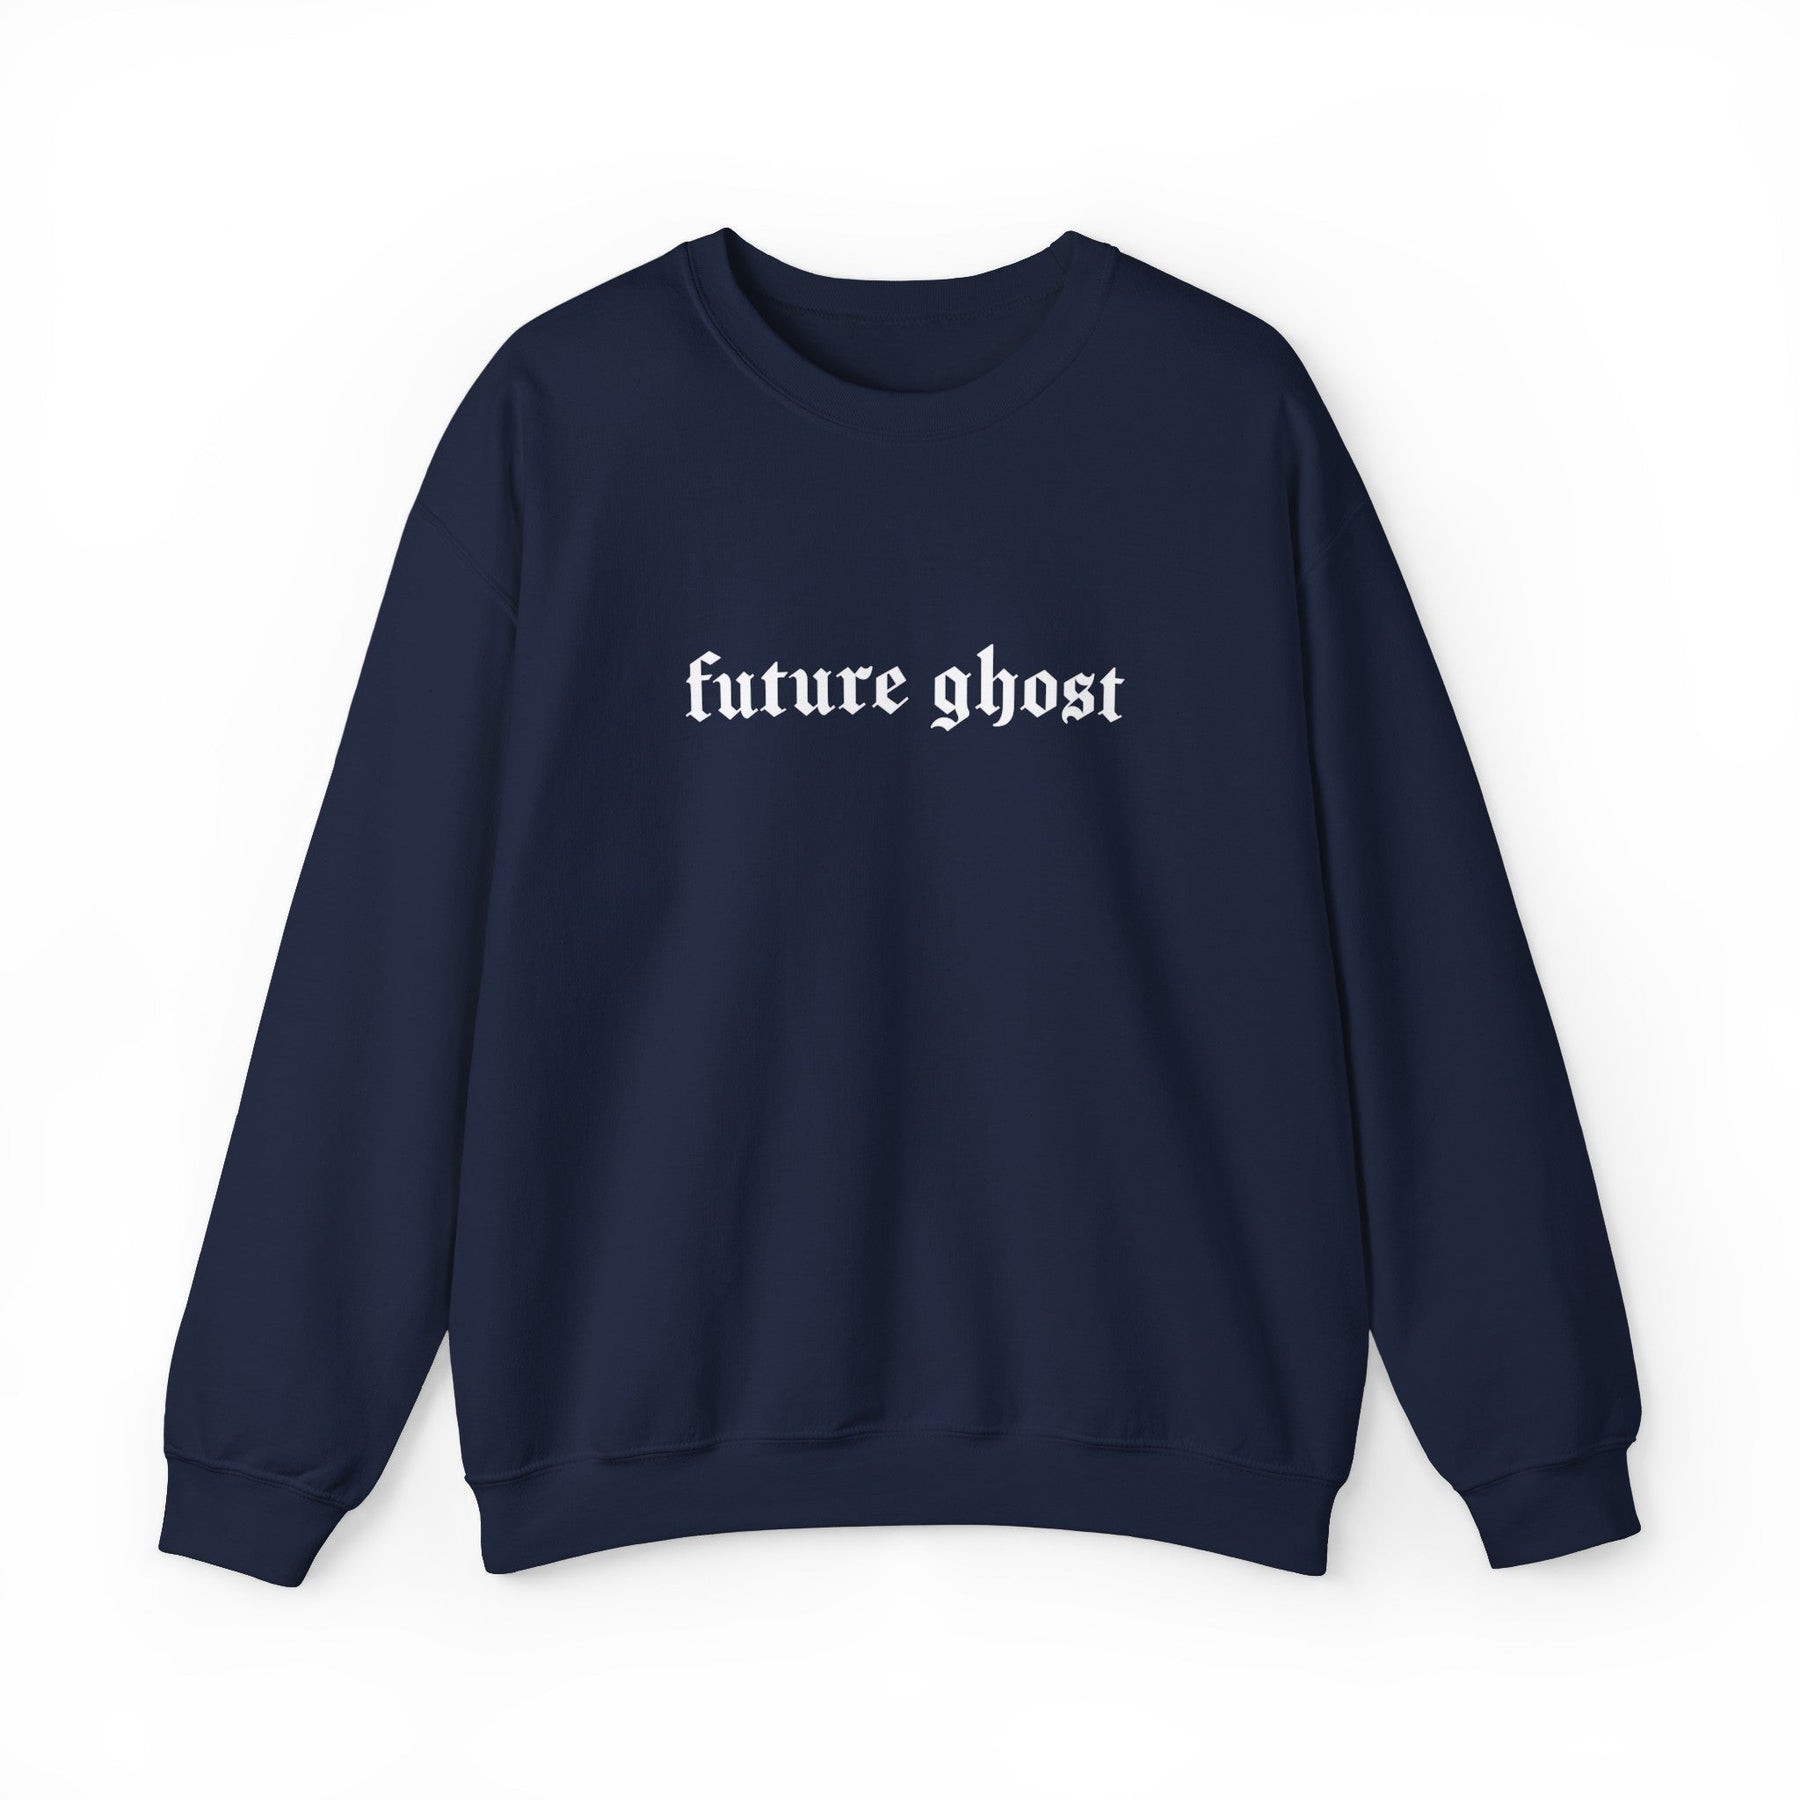 Future Ghost Long Sleeve Crew Neck Sweatshirt - Goth Cloth Co.Sweatshirt50595300923000434288